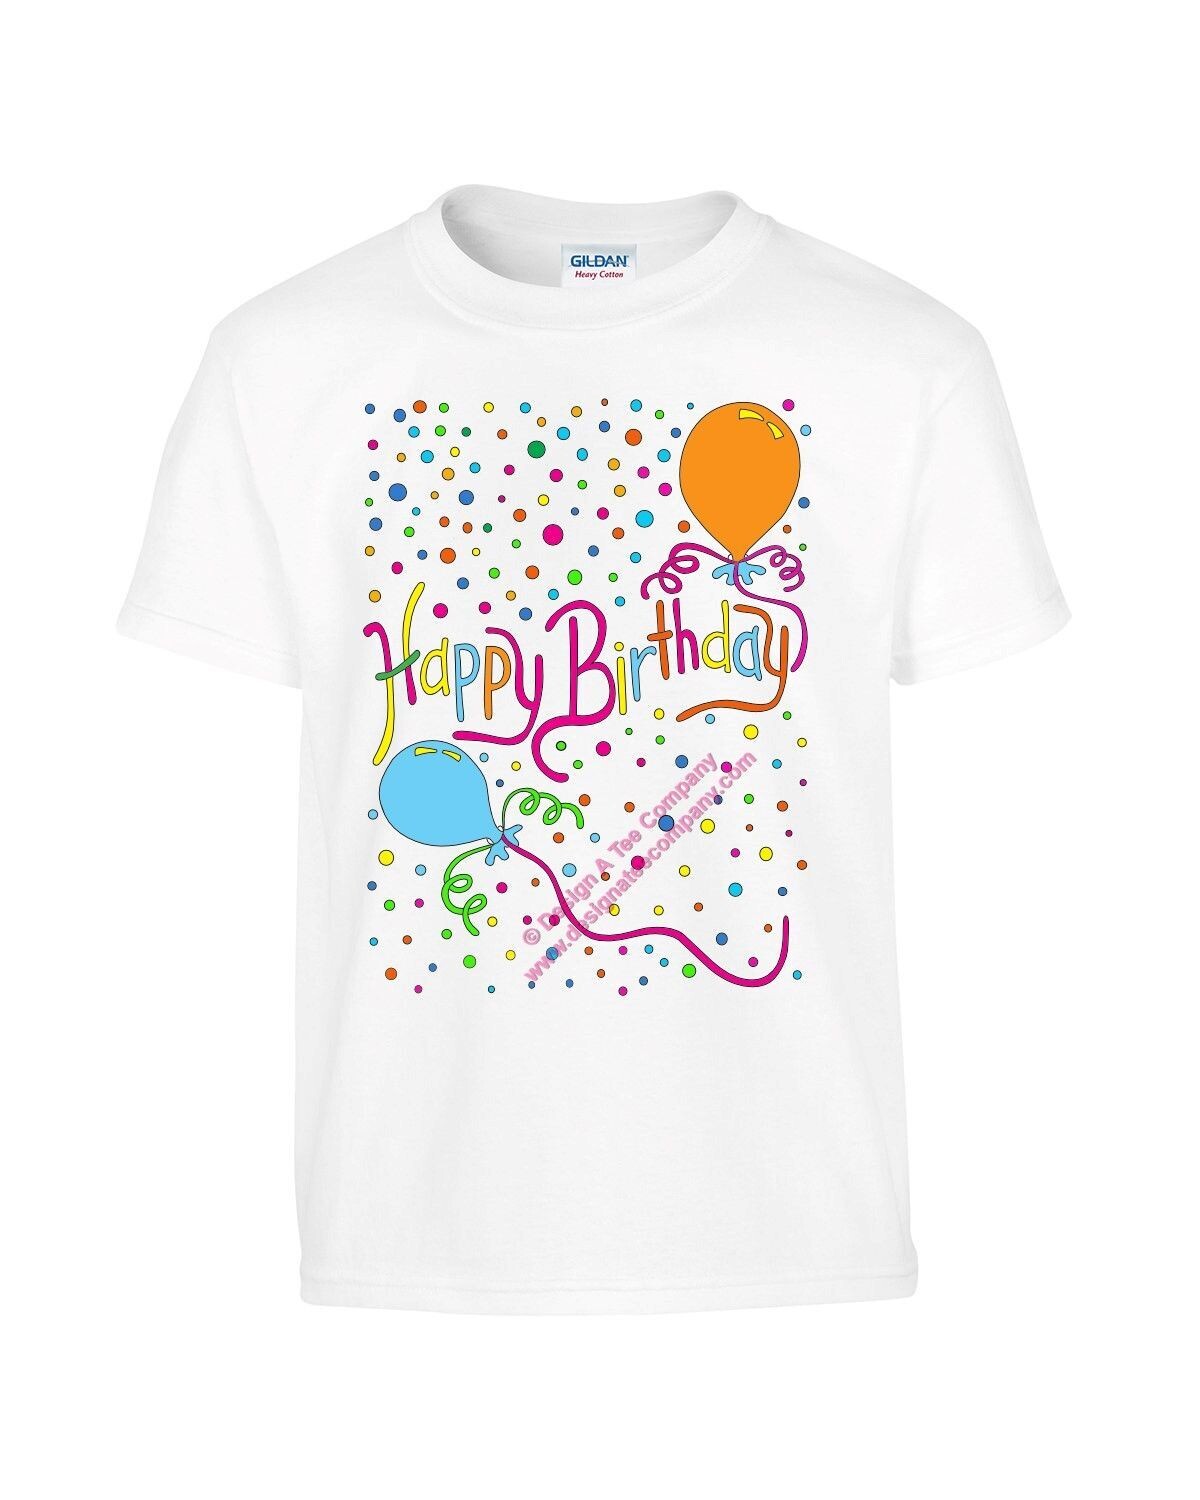 Kids Birthday shirts, Party shirts, Happy Birthday balloon confetti tutu pink orange teal yellow girls youth graphic t-shirt white tee